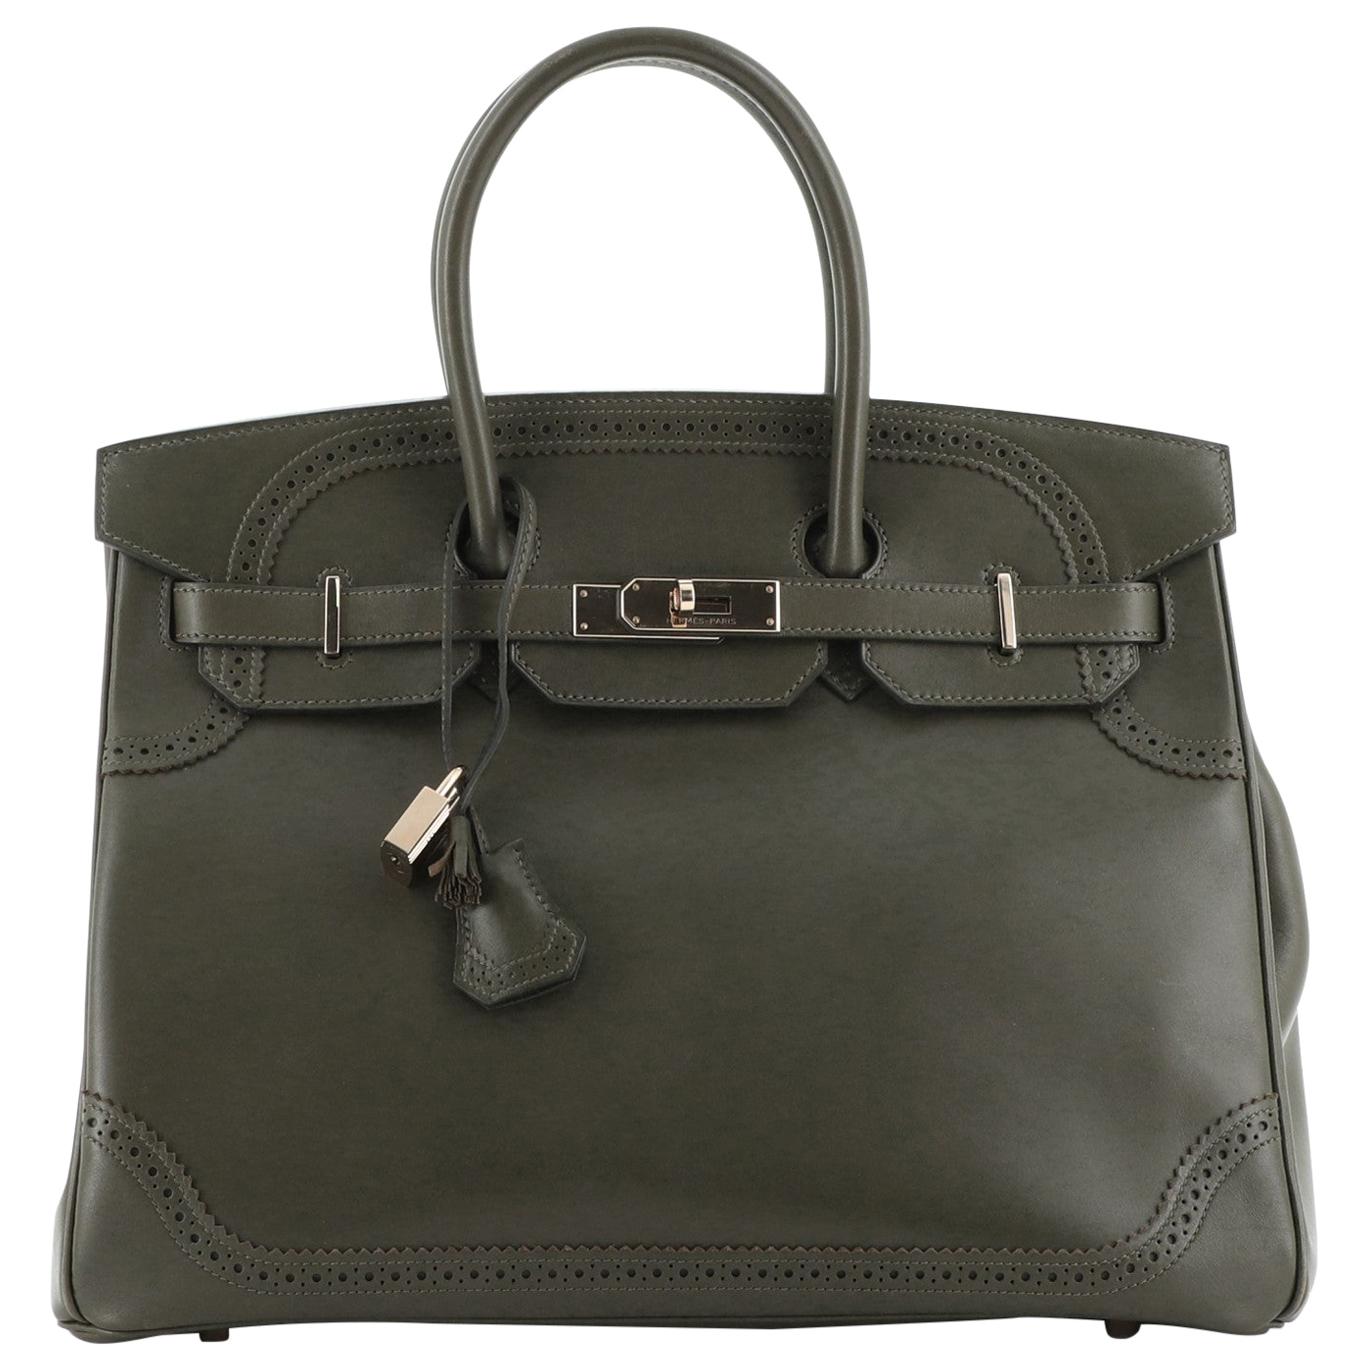 Hermes Birkin Ghillies Handbag Vert Veronese Tadelakt with Permabrass Hardware